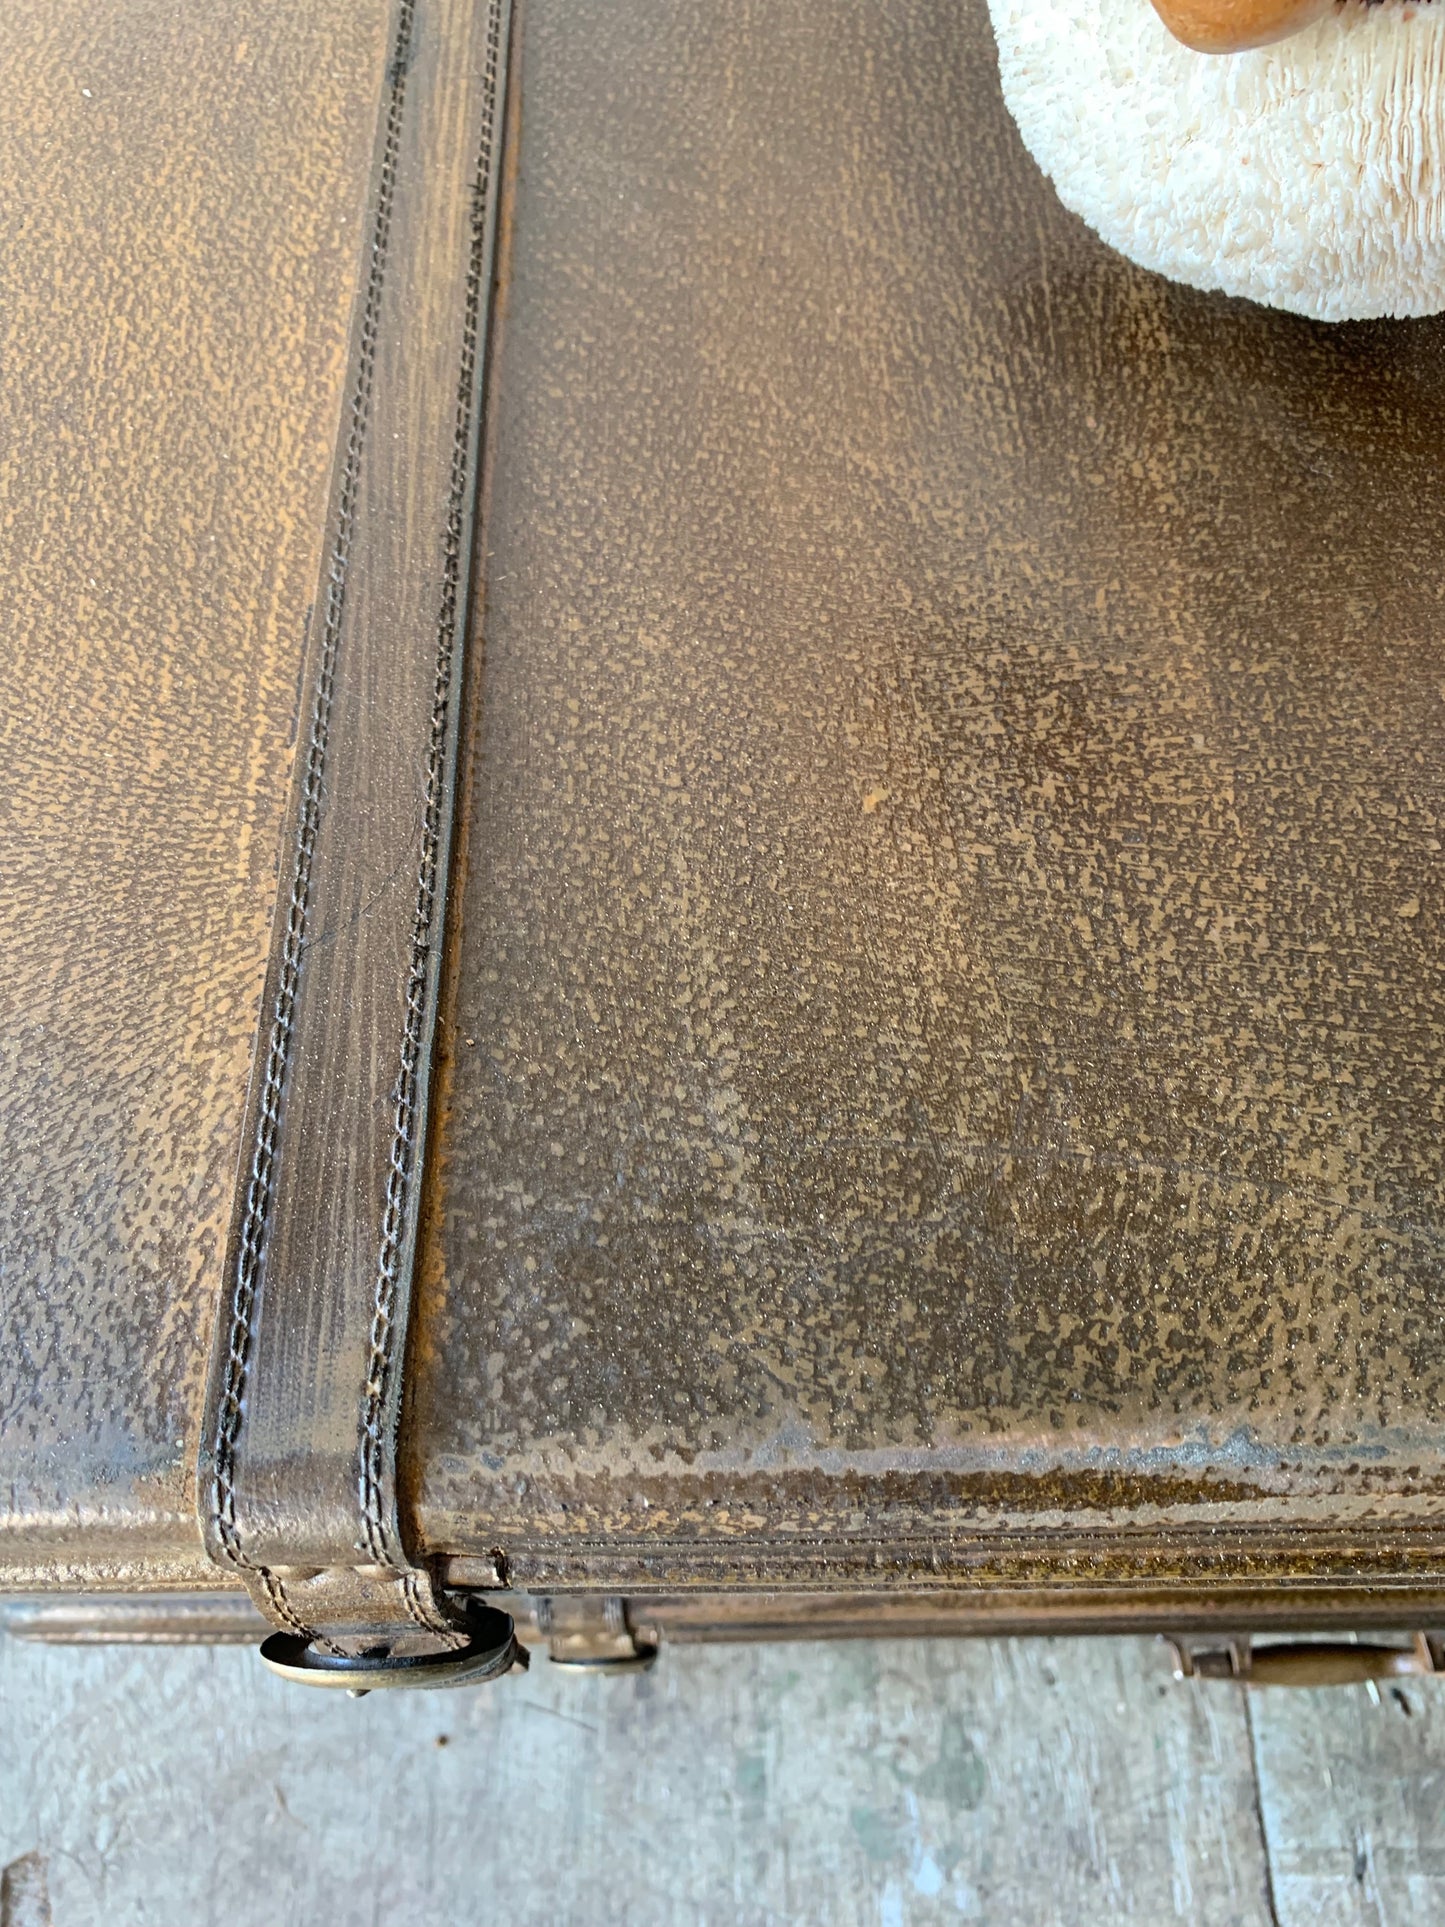 Vintage Suitcase Coffee Table